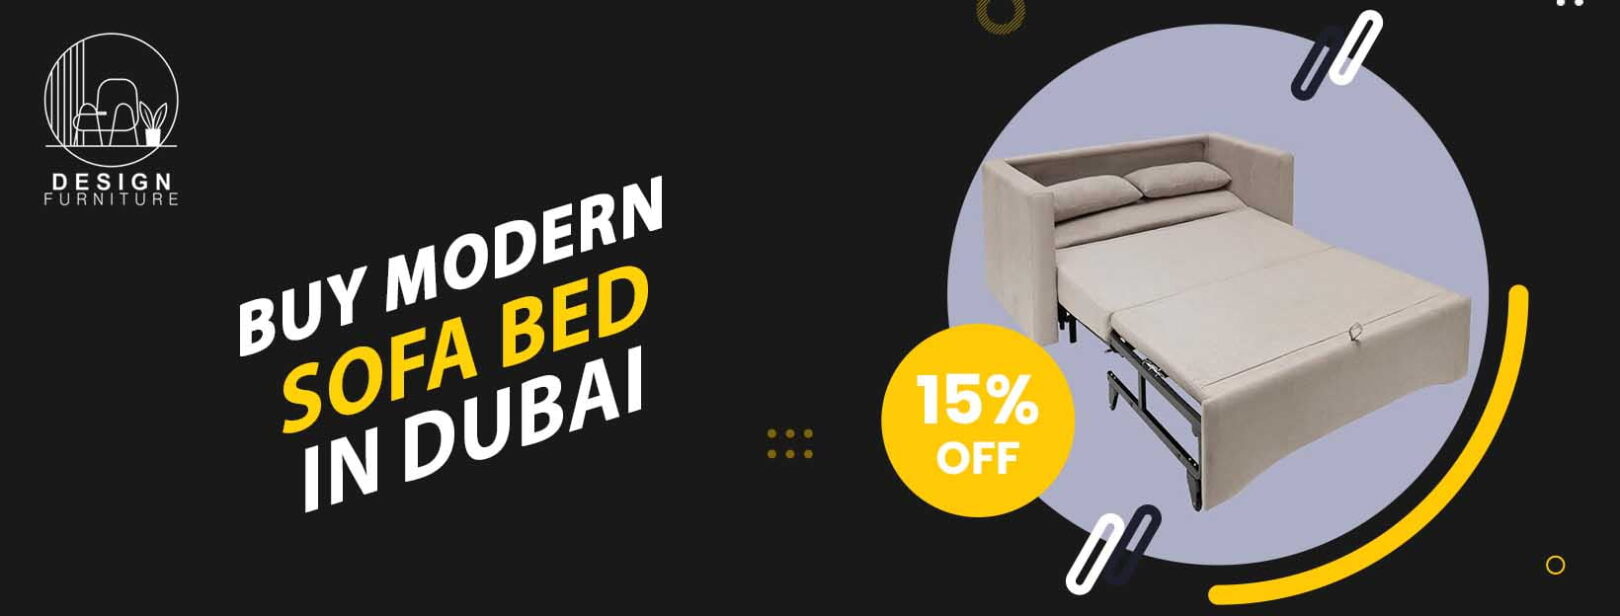 Buy Modern Sofa Bed in Dubai